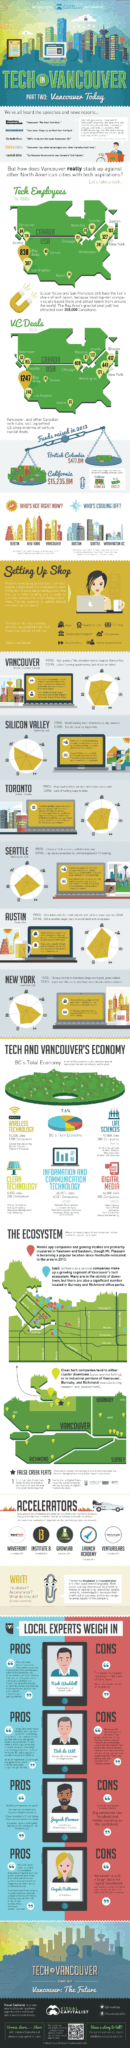 tech-in-vancouver-legitimate-hub-infographic